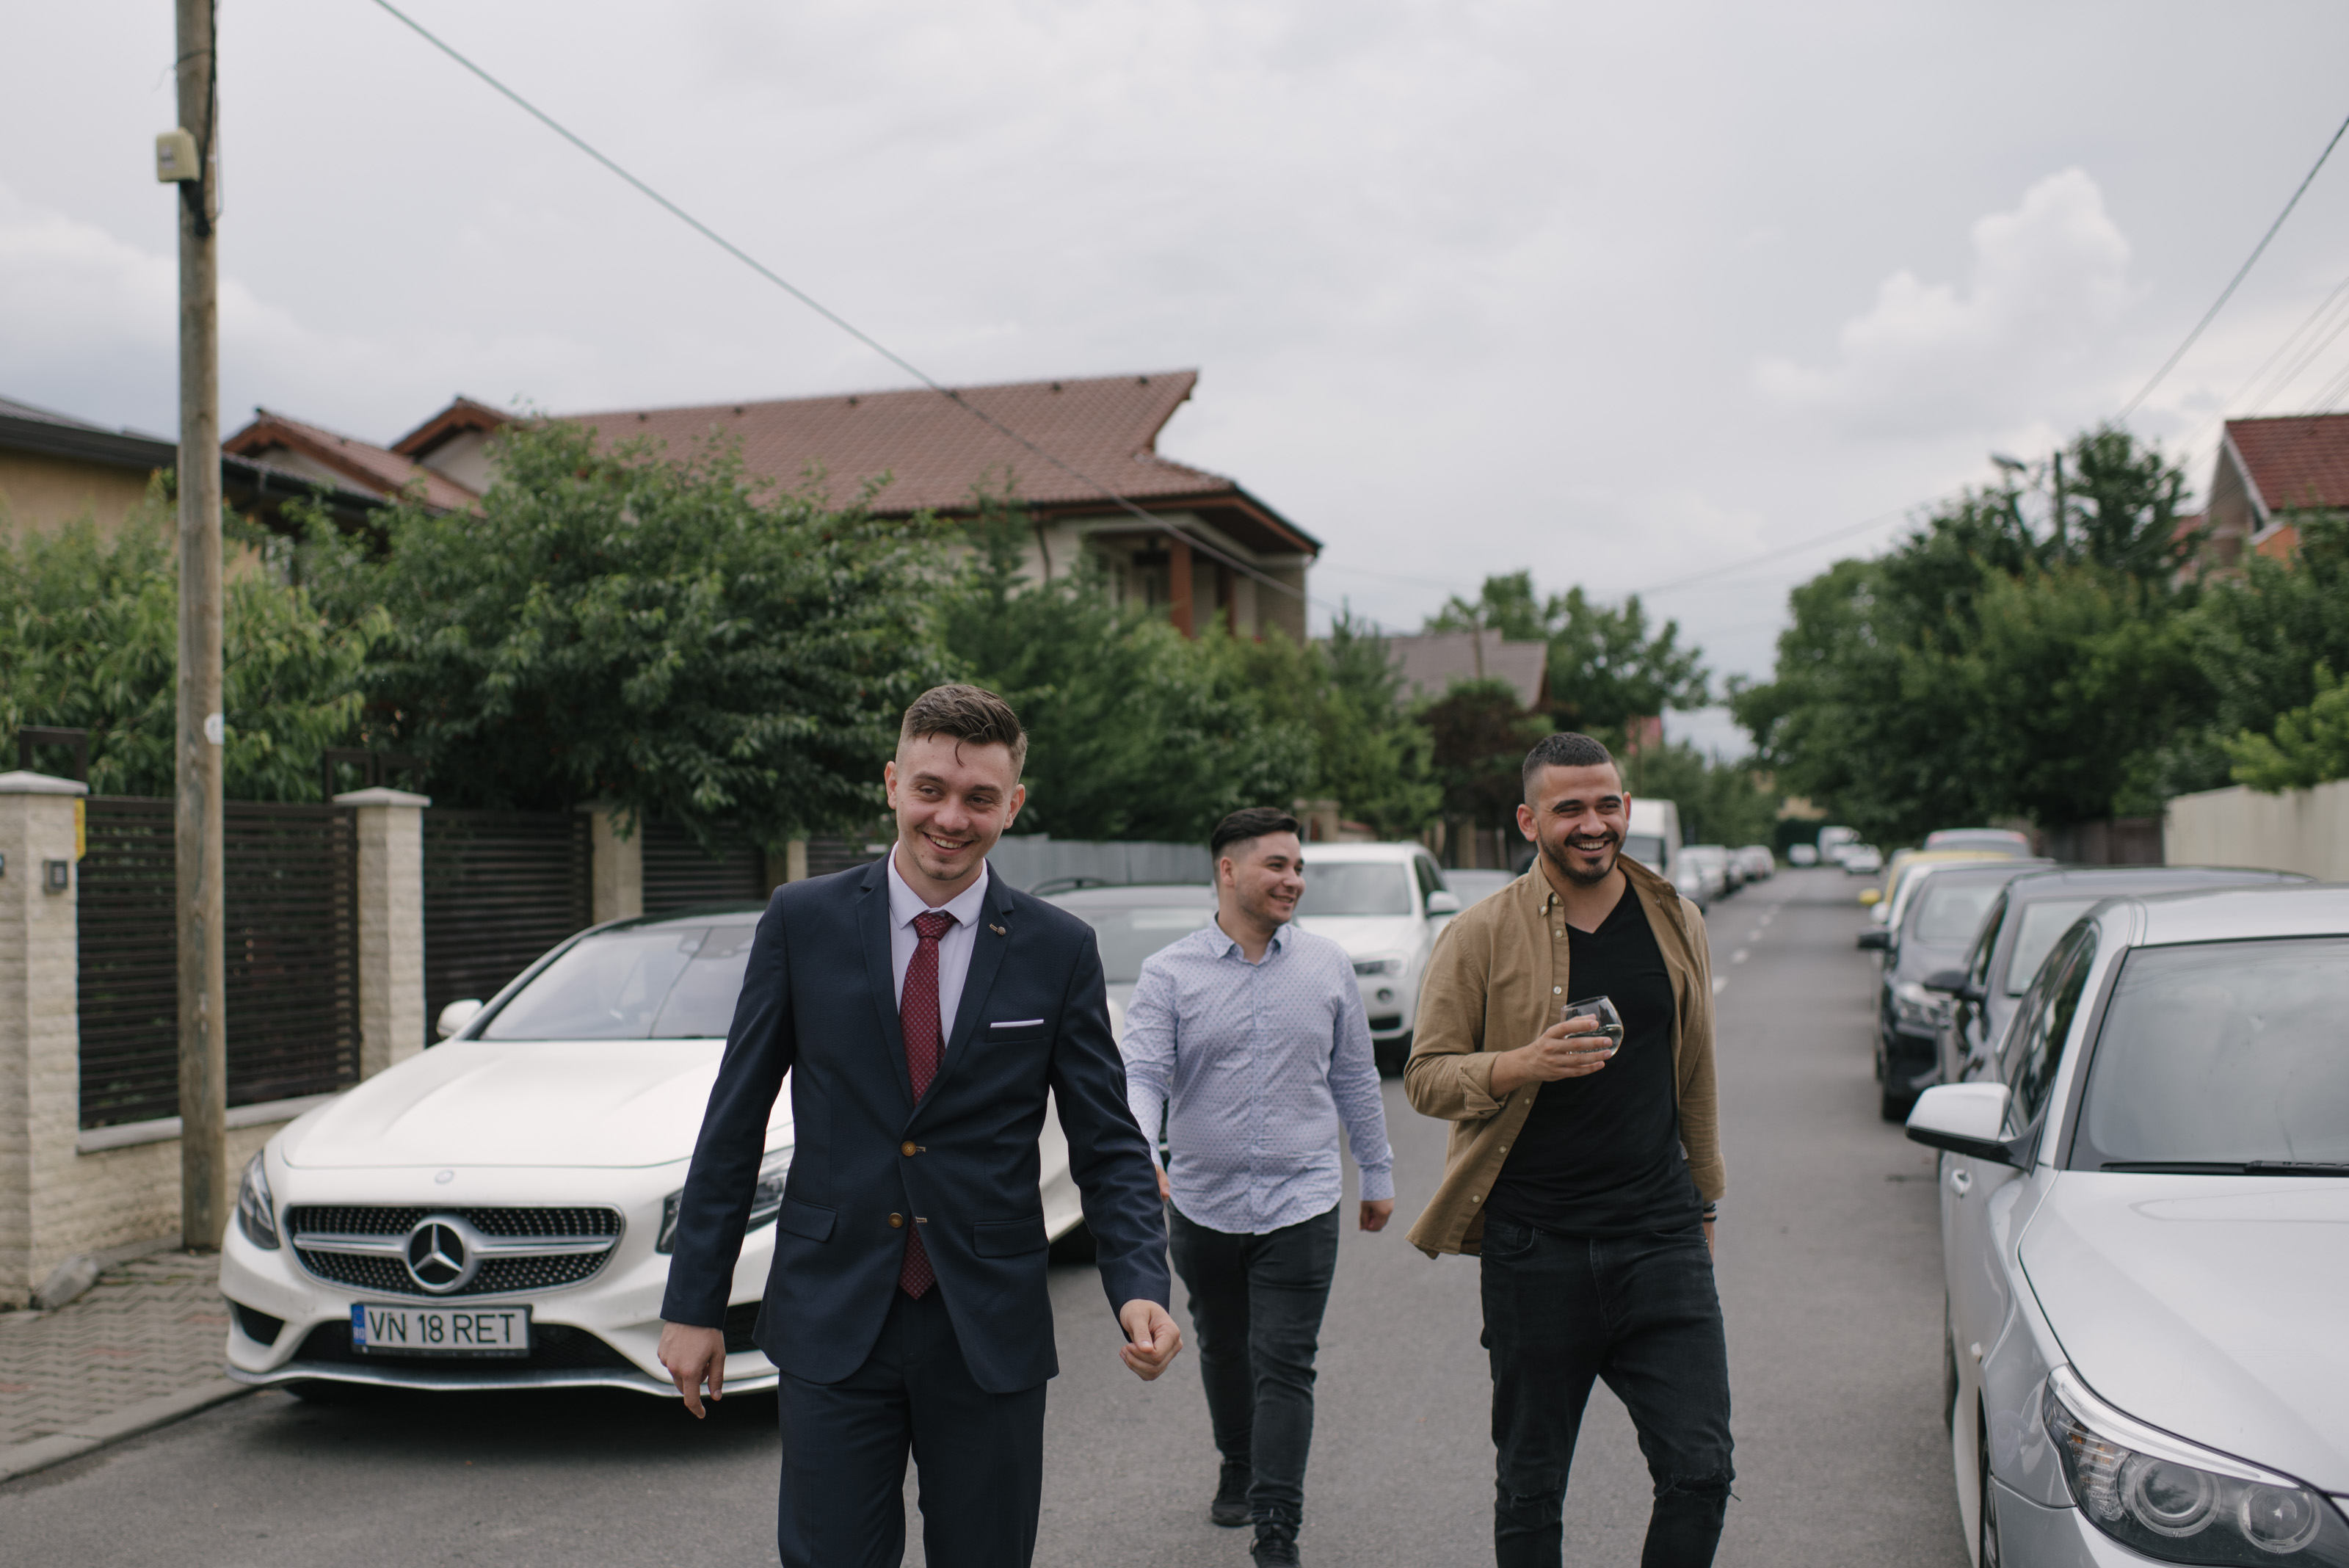 Focșani Romania wedding